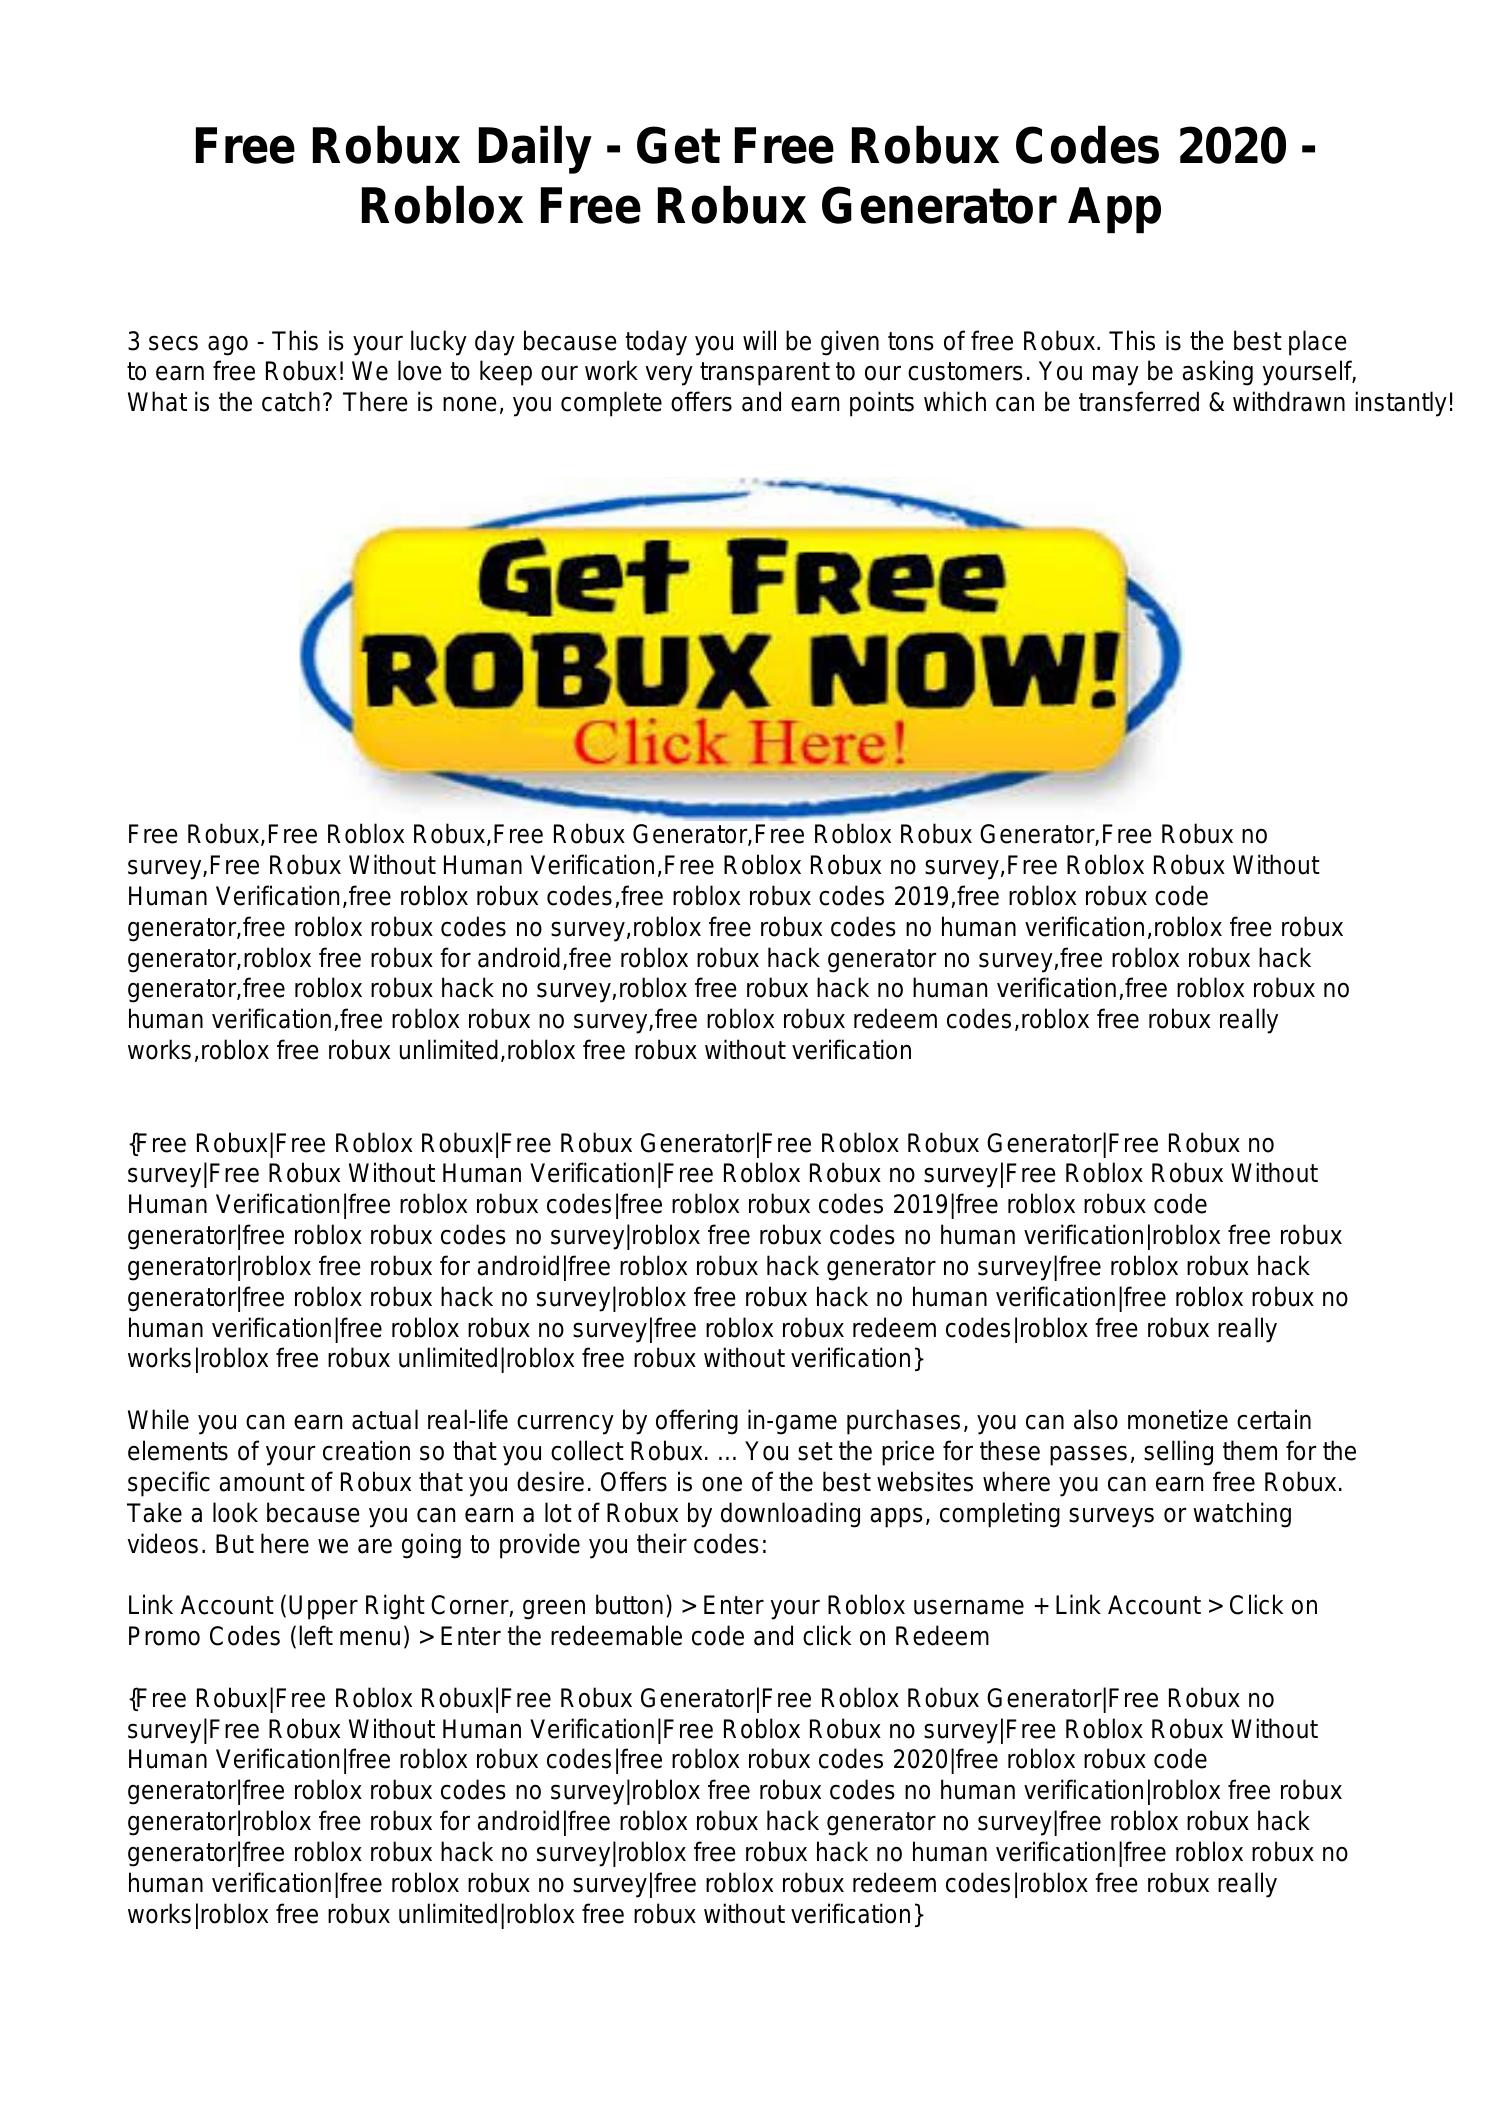 Free Roblox Generator Promo Code